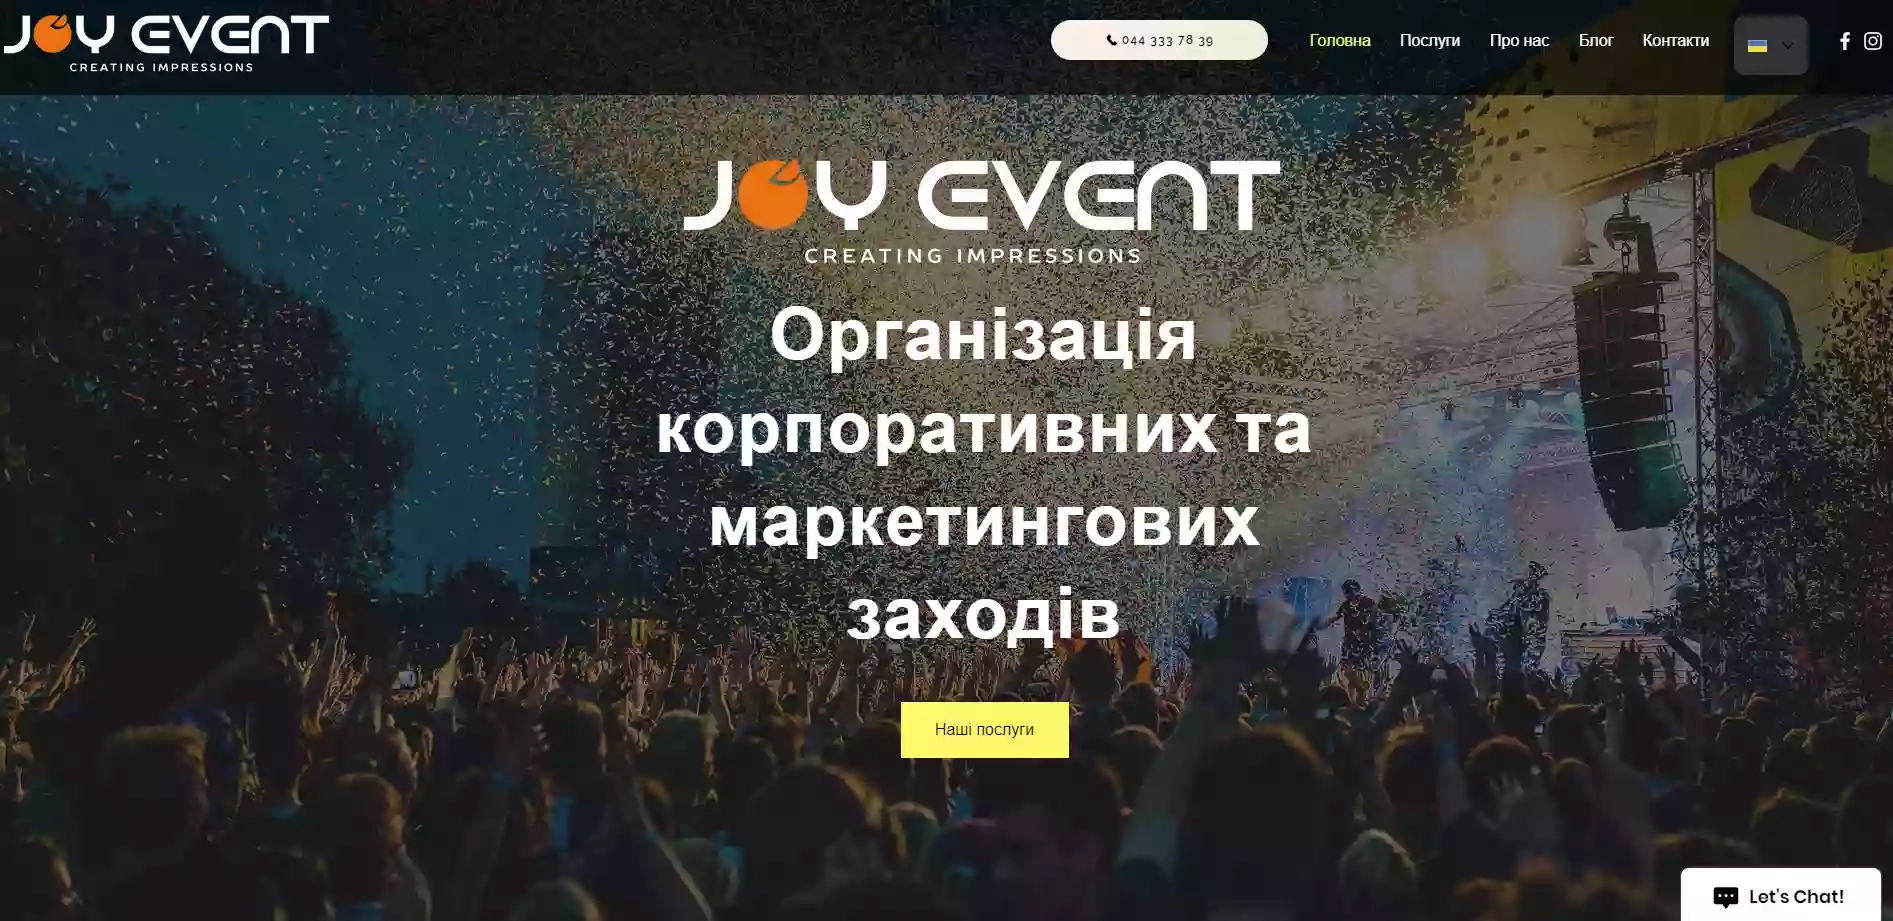 JOY EVENT